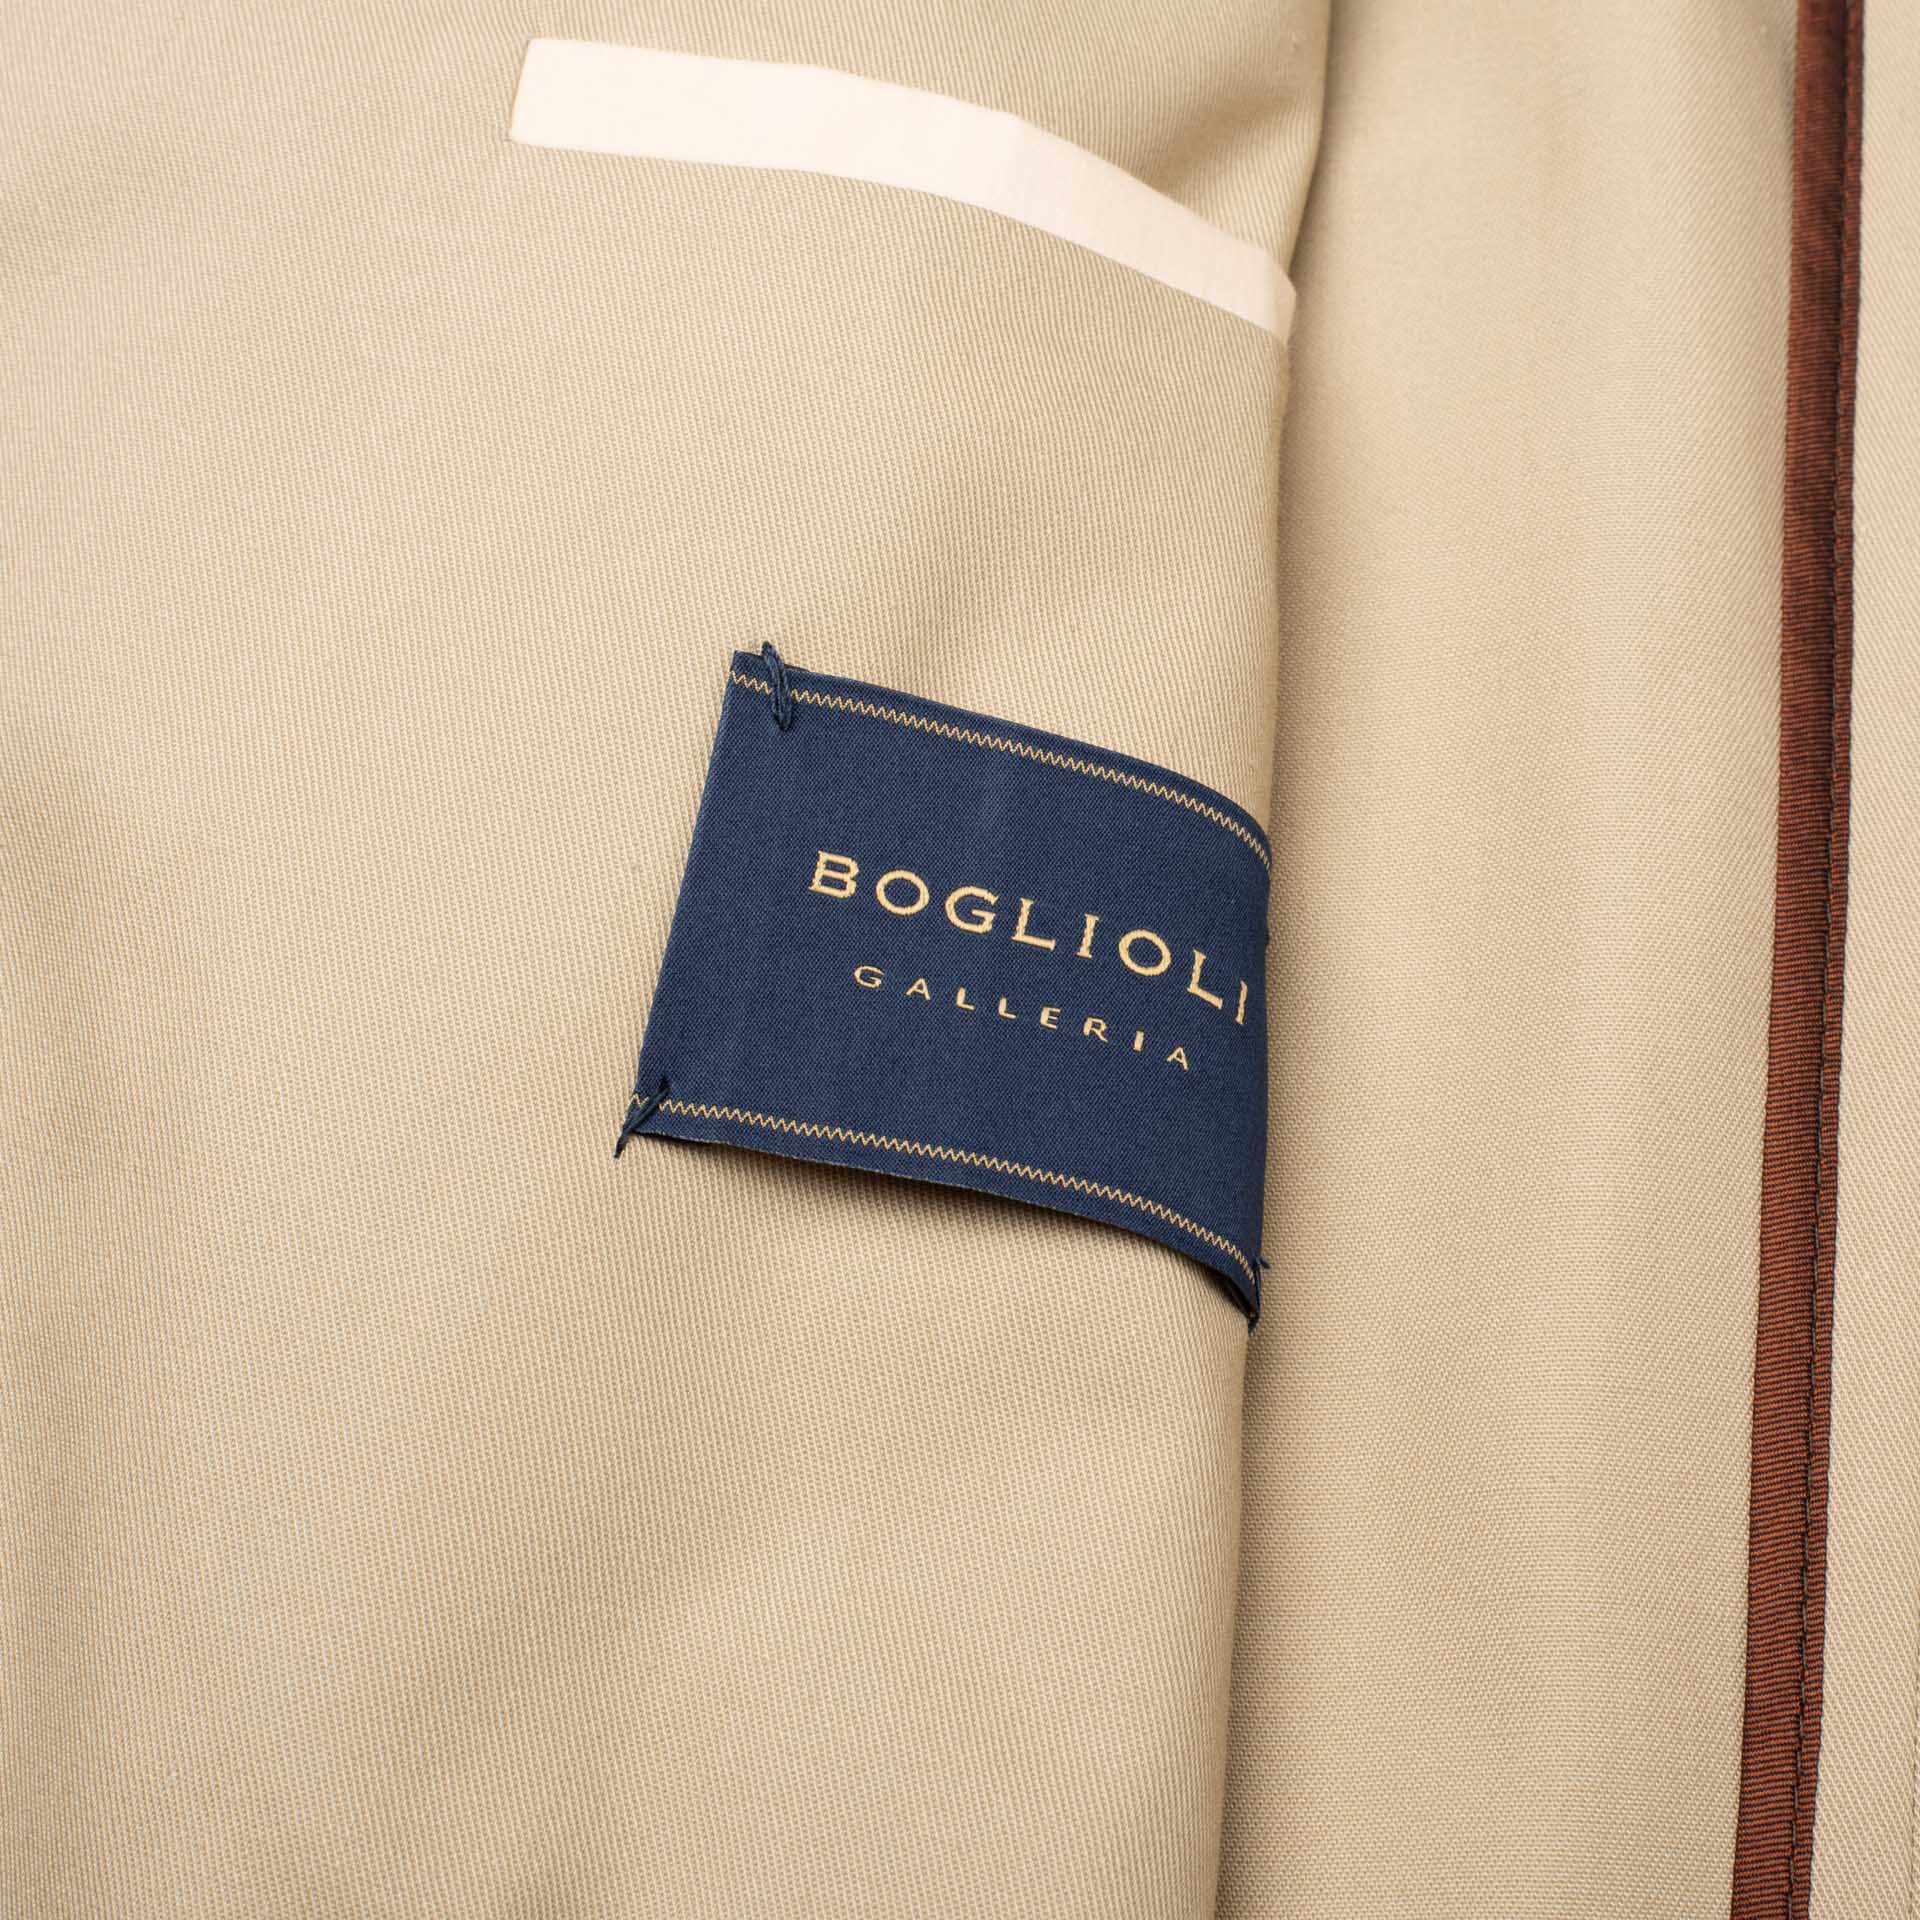 BOGLIOLI Milano Galleria "73" Beige Cotton Blend Unlined Jacket EU 50 NEW US 40